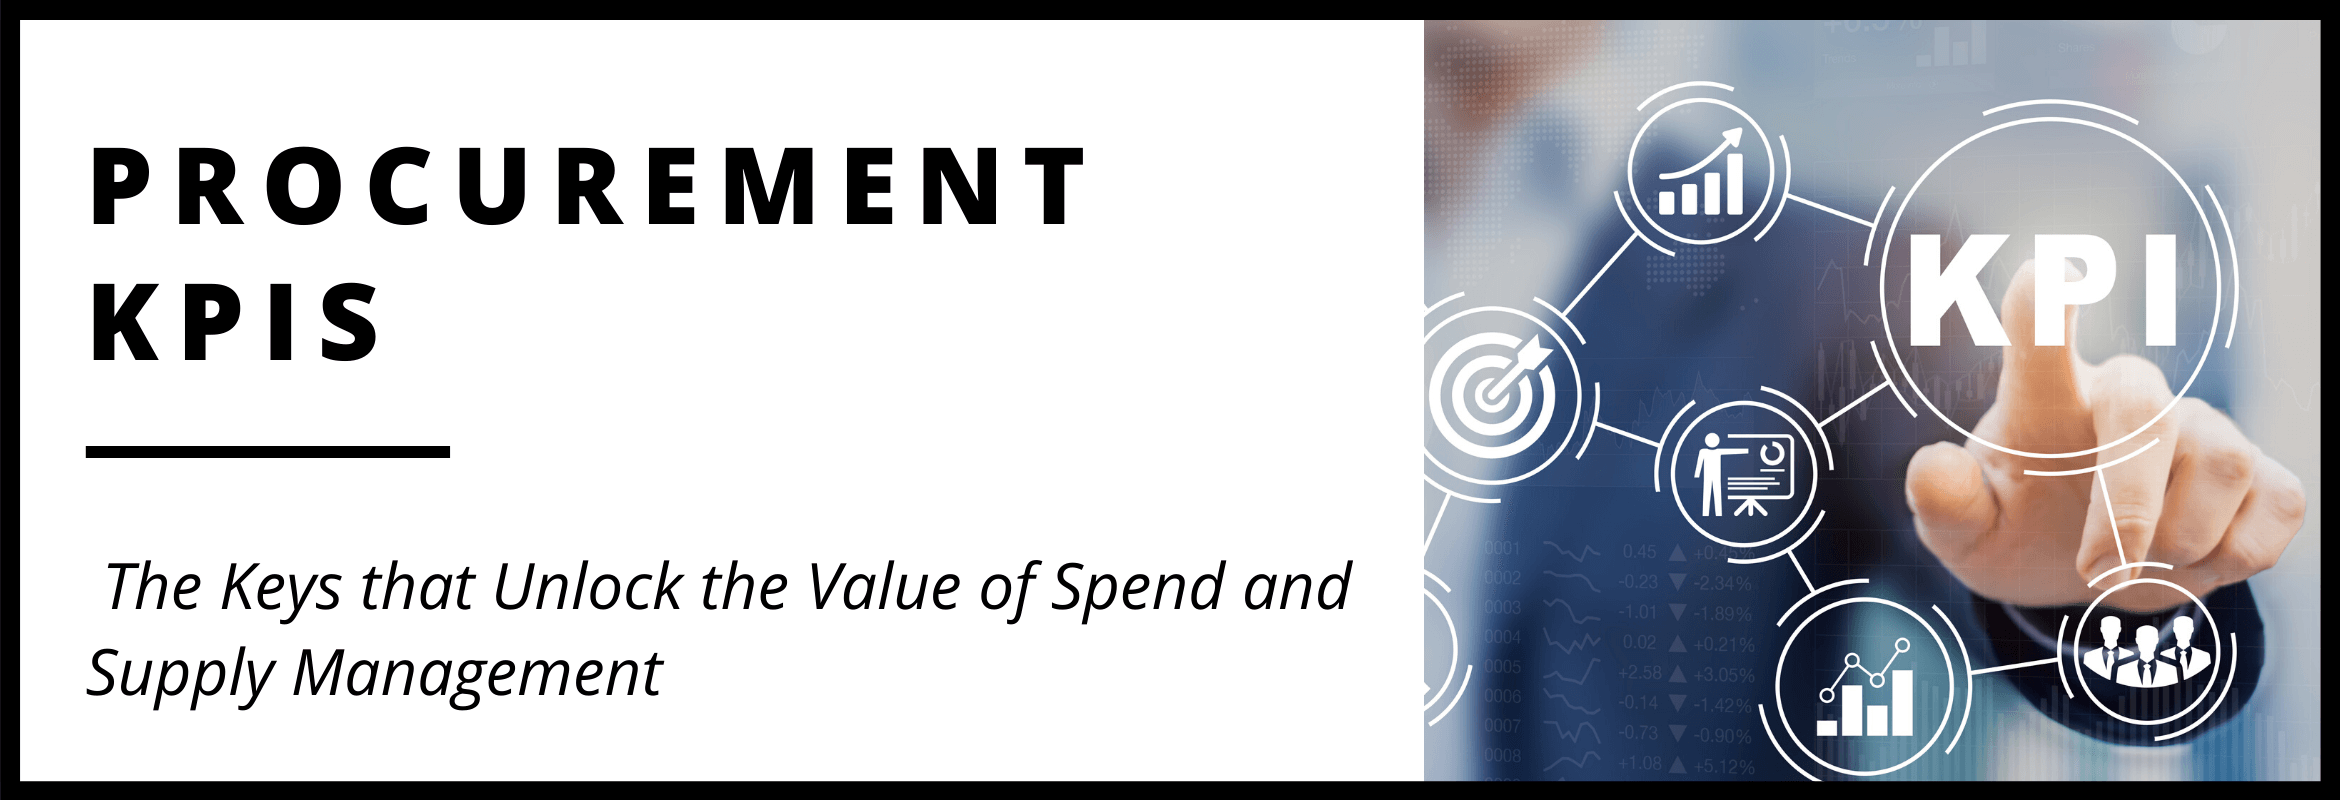 Procurement KPIs and Spend Management